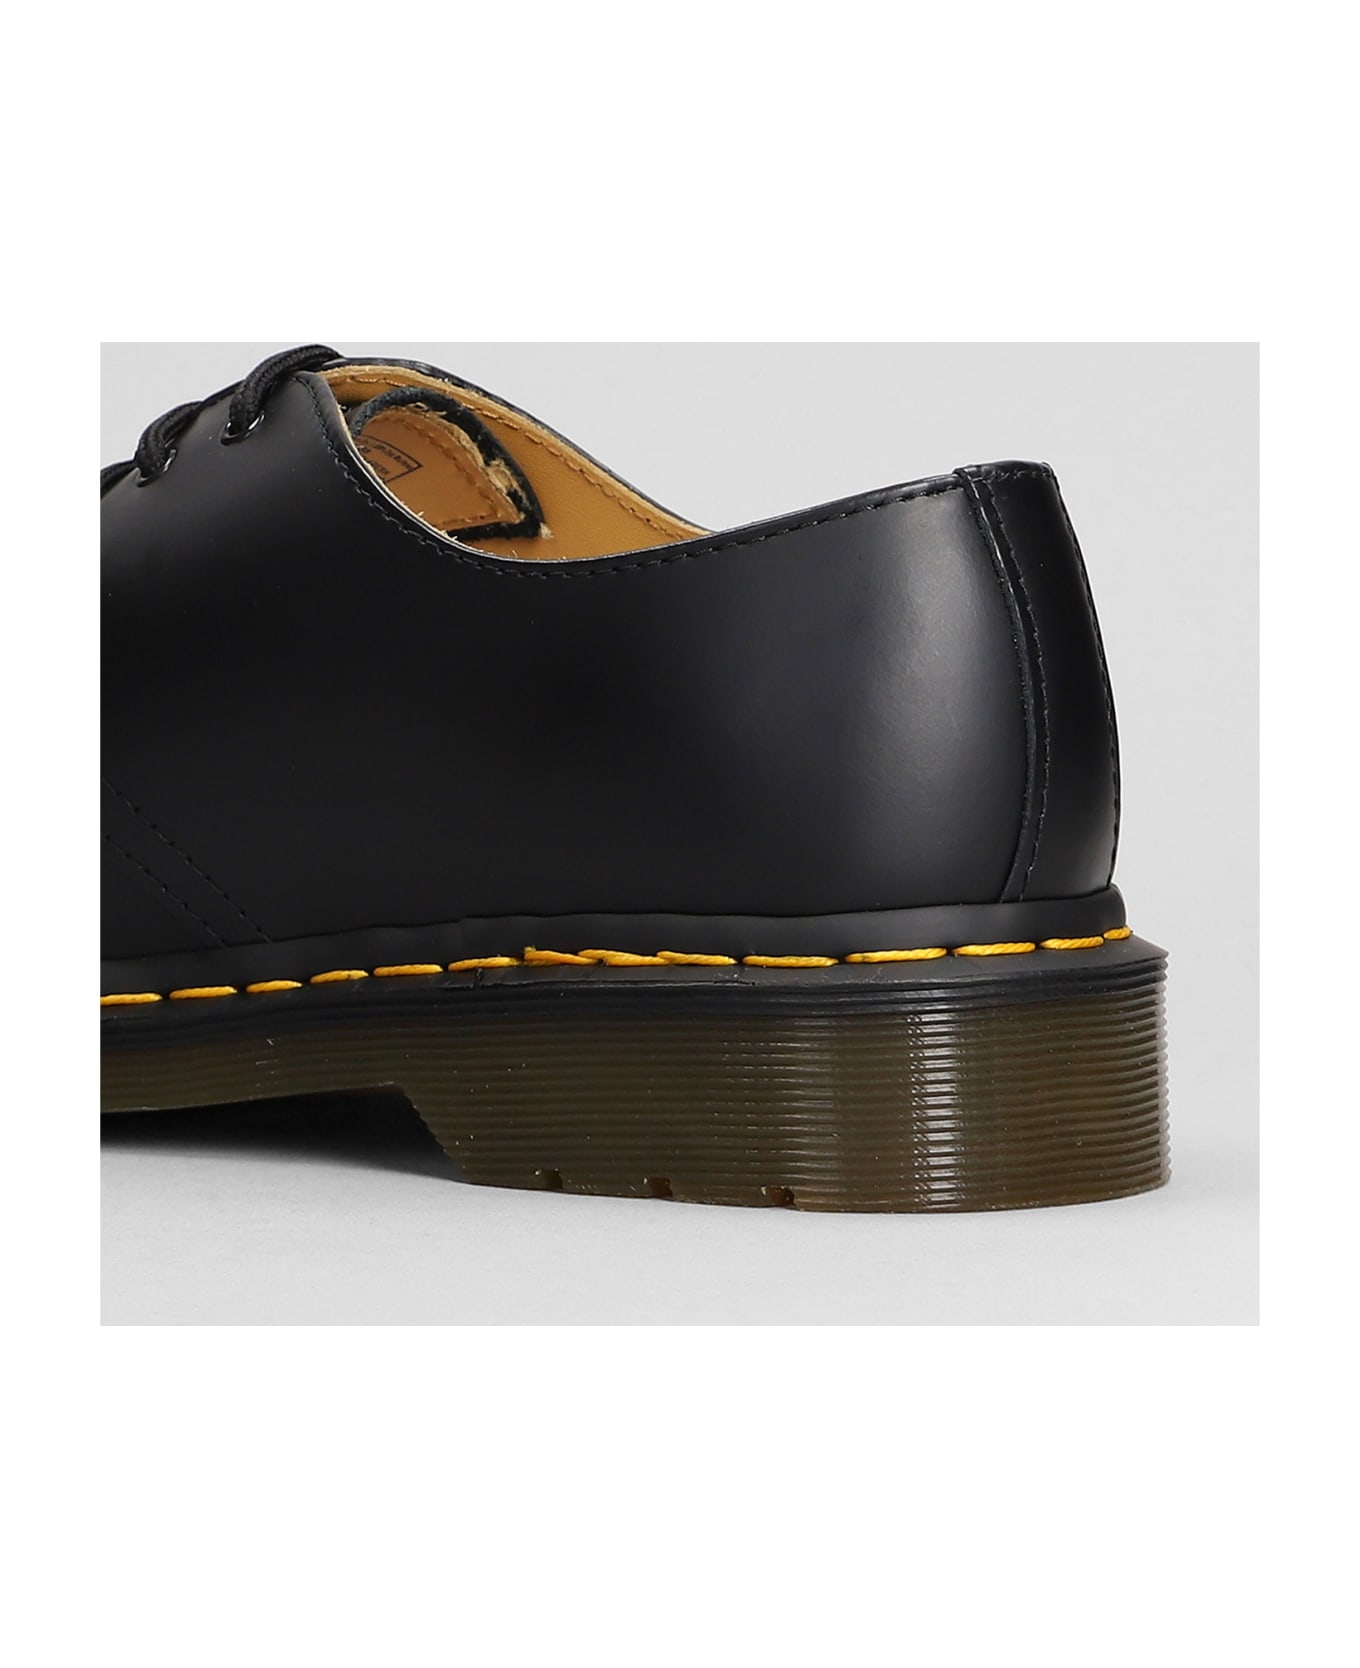 Dr. Martens 1461 Lace Up Shoes isabel In Black Leather - black